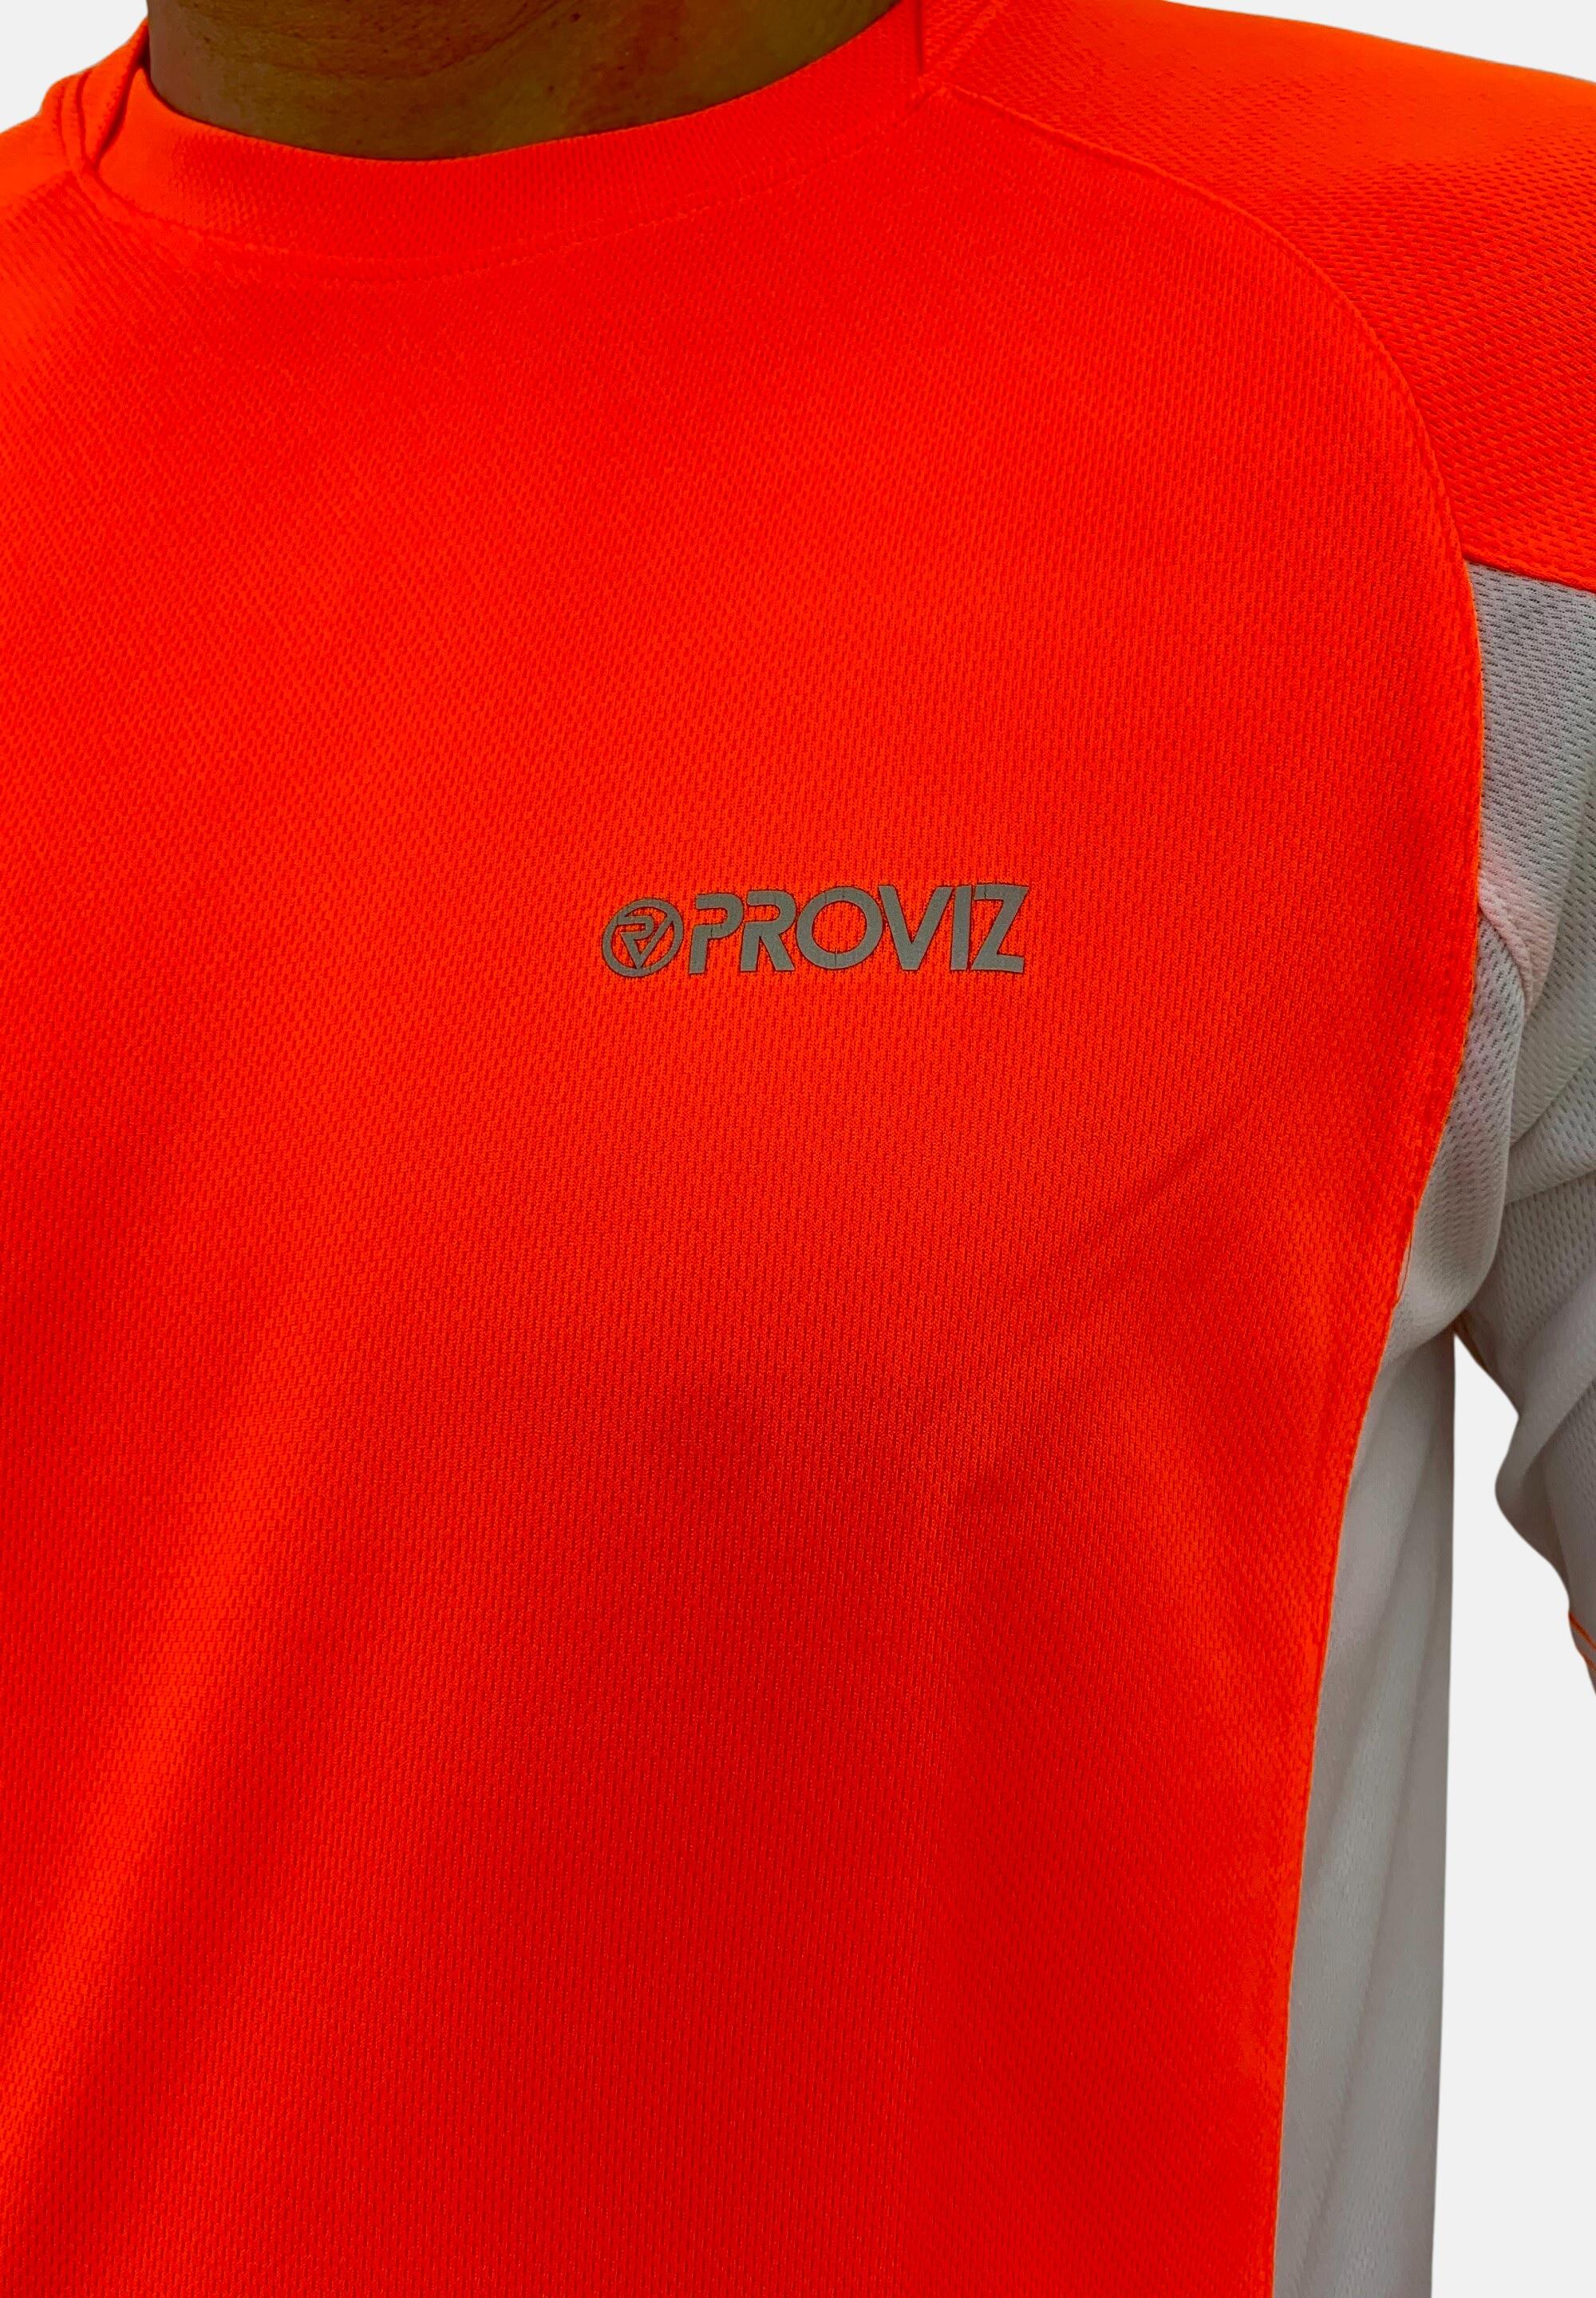 Proviz Classic Mens Sports T-Shirt Short Sleeve Reflective Activewear Top 5/7